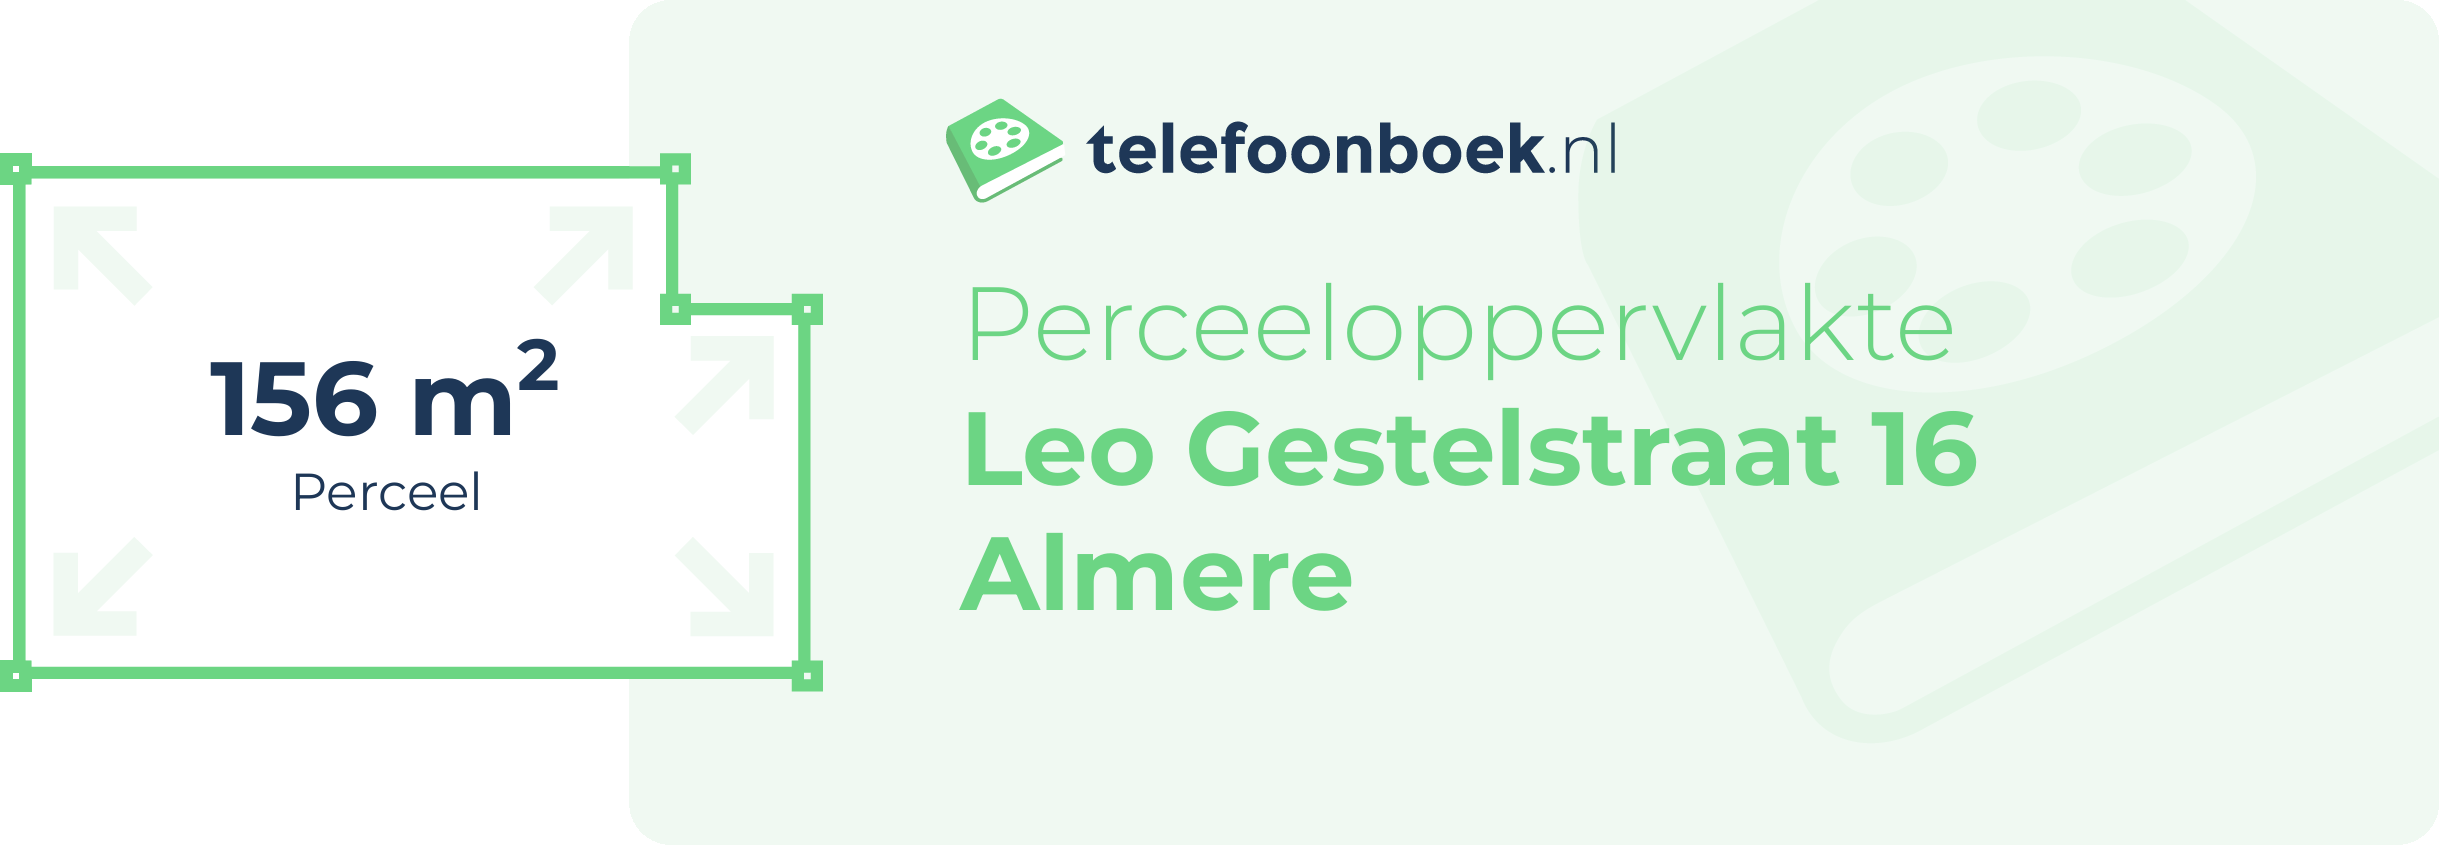 Perceeloppervlakte Leo Gestelstraat 16 Almere